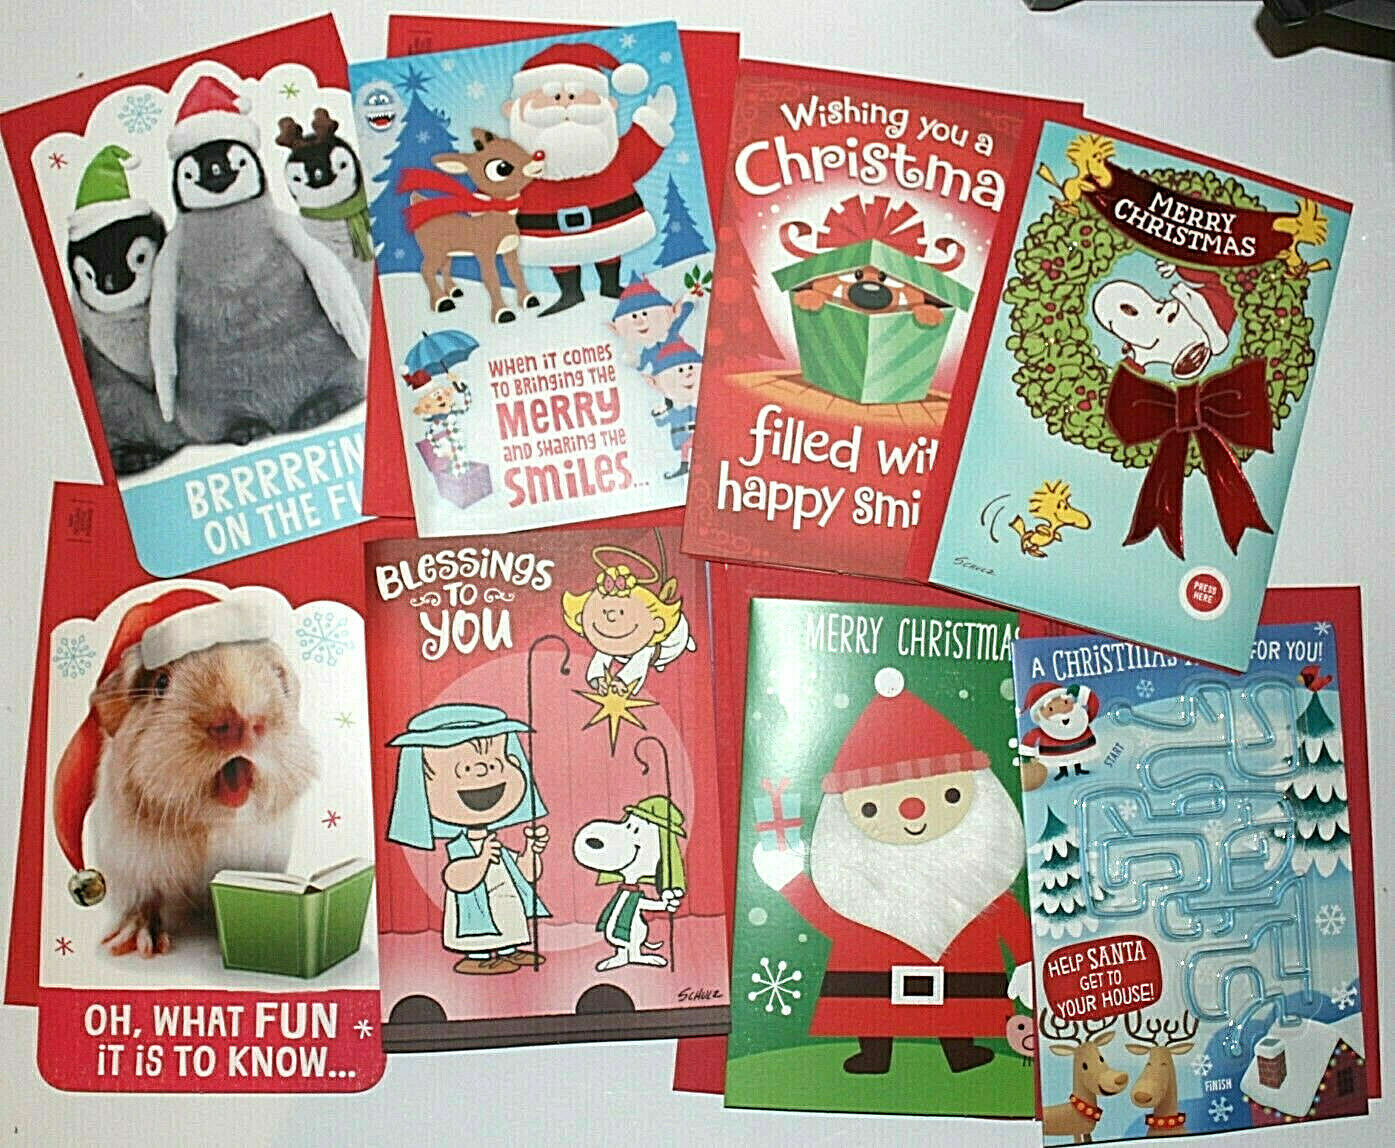 (100) New Hallmark Christmas Greeting Cards Assorted Holiday & Envelopes Mailing Hallmark Does Not Apply - фотография #4